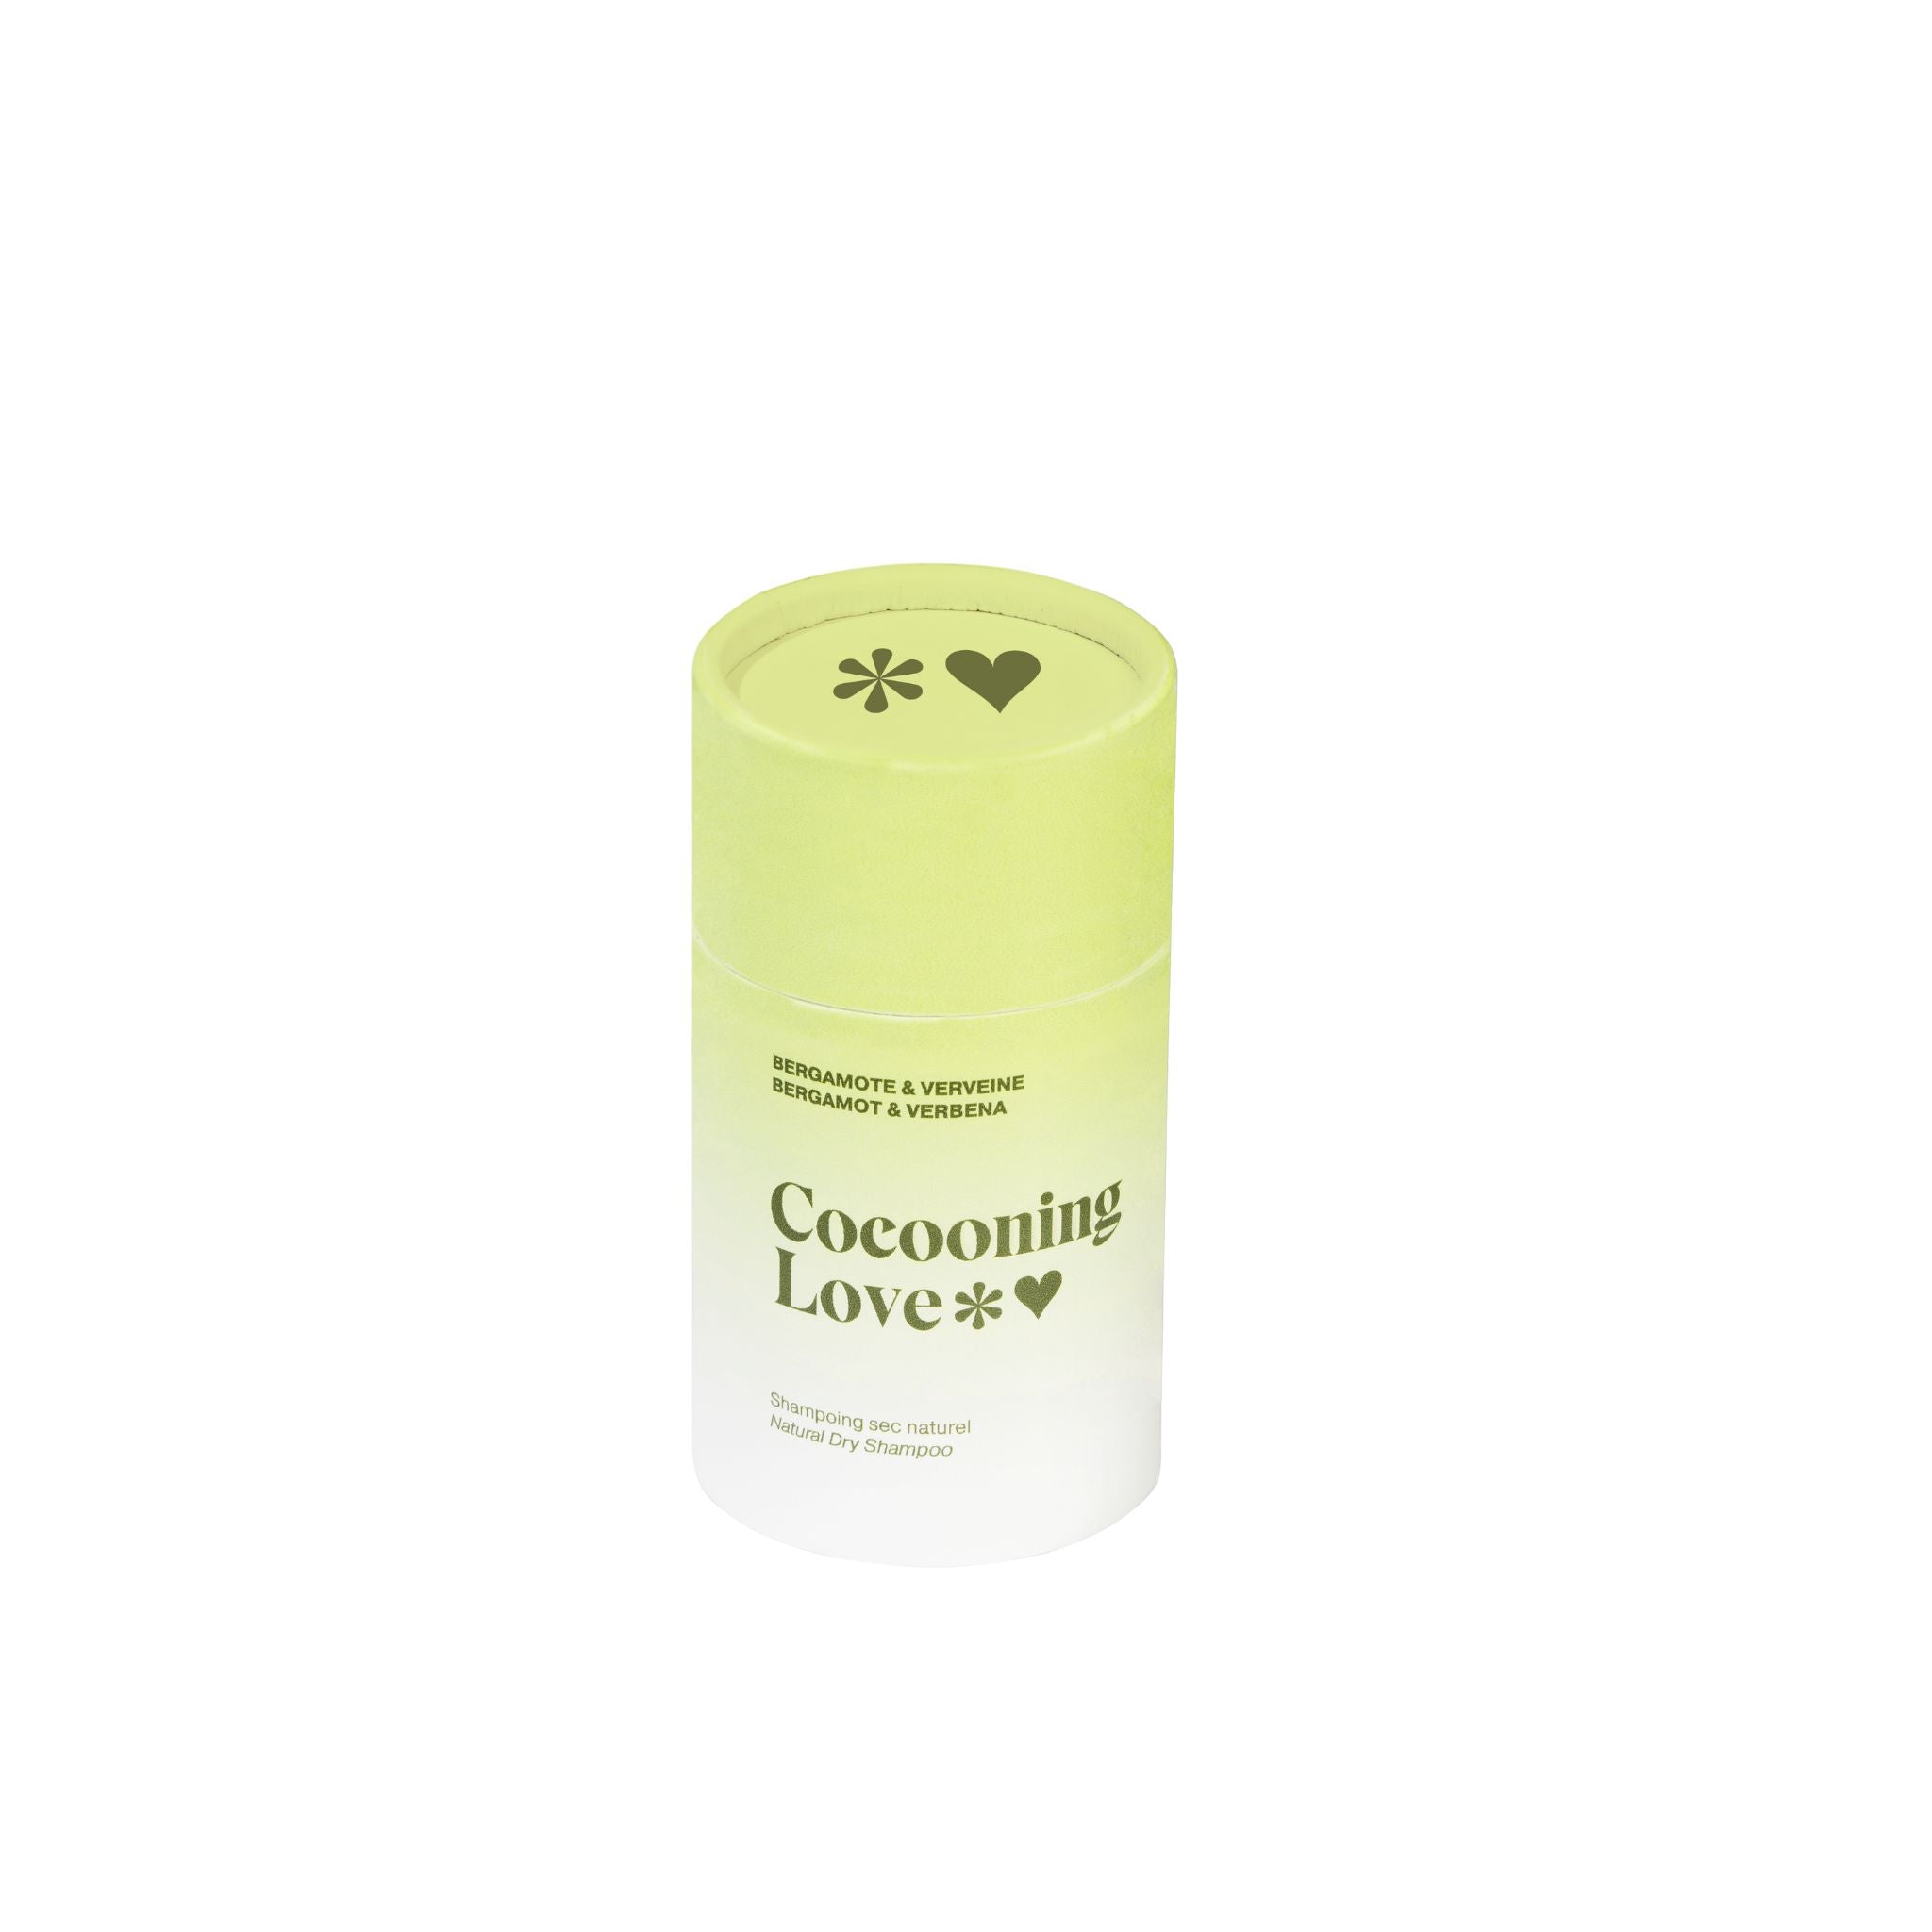 Cocooning Love. Shampoing Sec Bergamote et Verveine - 50 g - Concept C. Shop